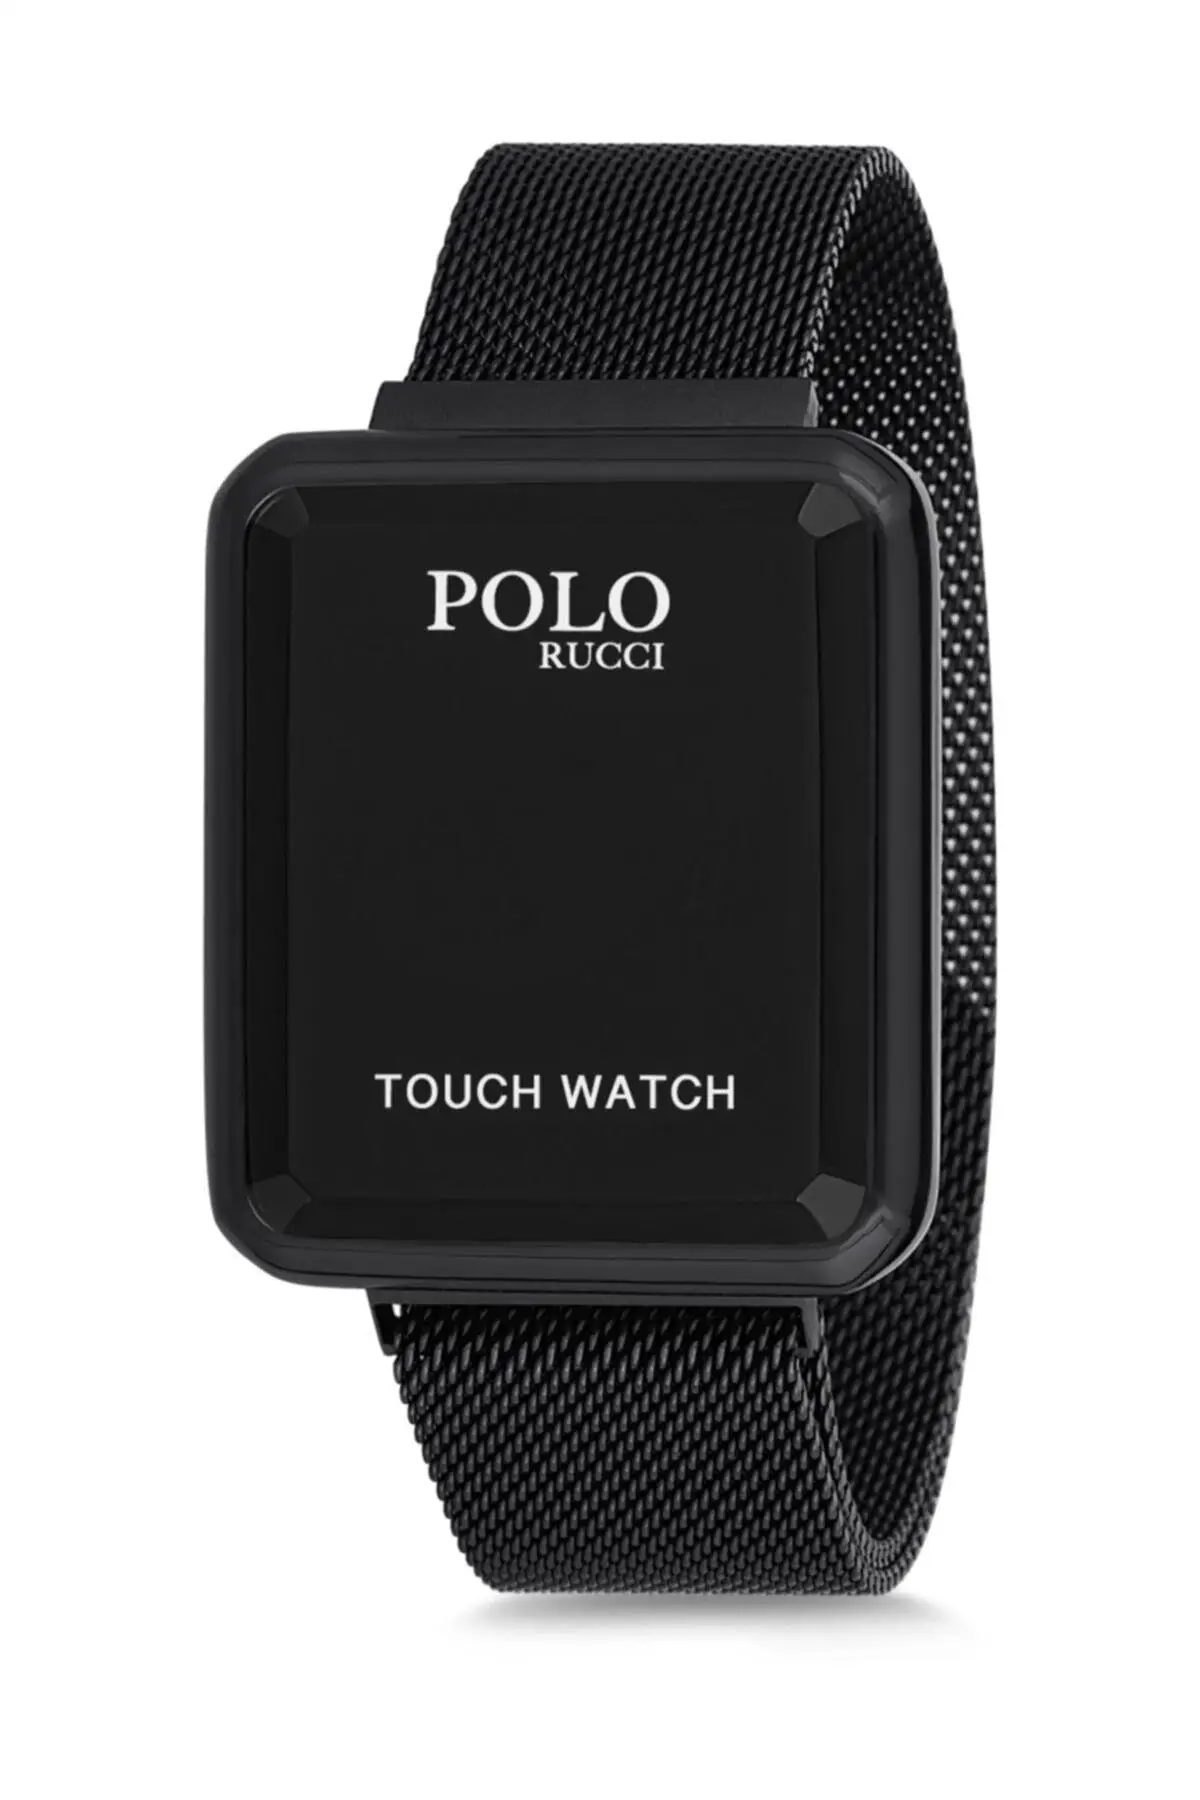 

2022 Watches Wicker Cord Unisex Luxury Fashion Sport Refresh Brands Top Quartz Stylish watch High Quality Premium wristband